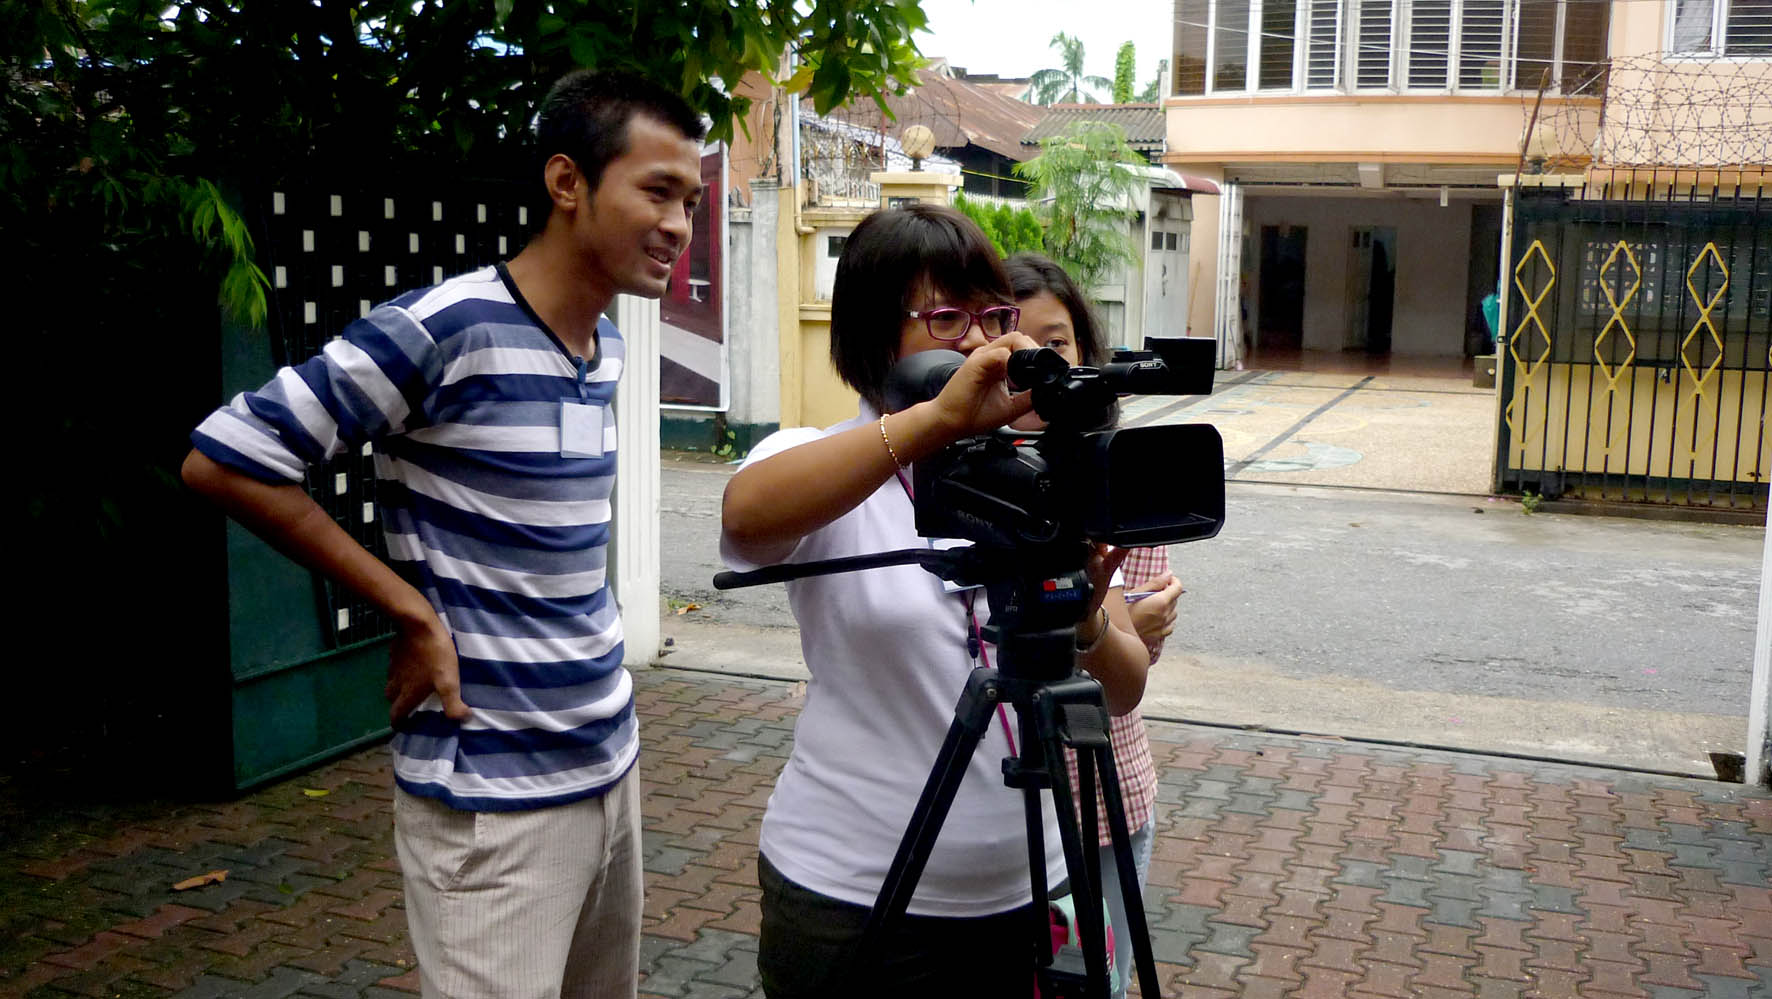 Yangon Film School Courses